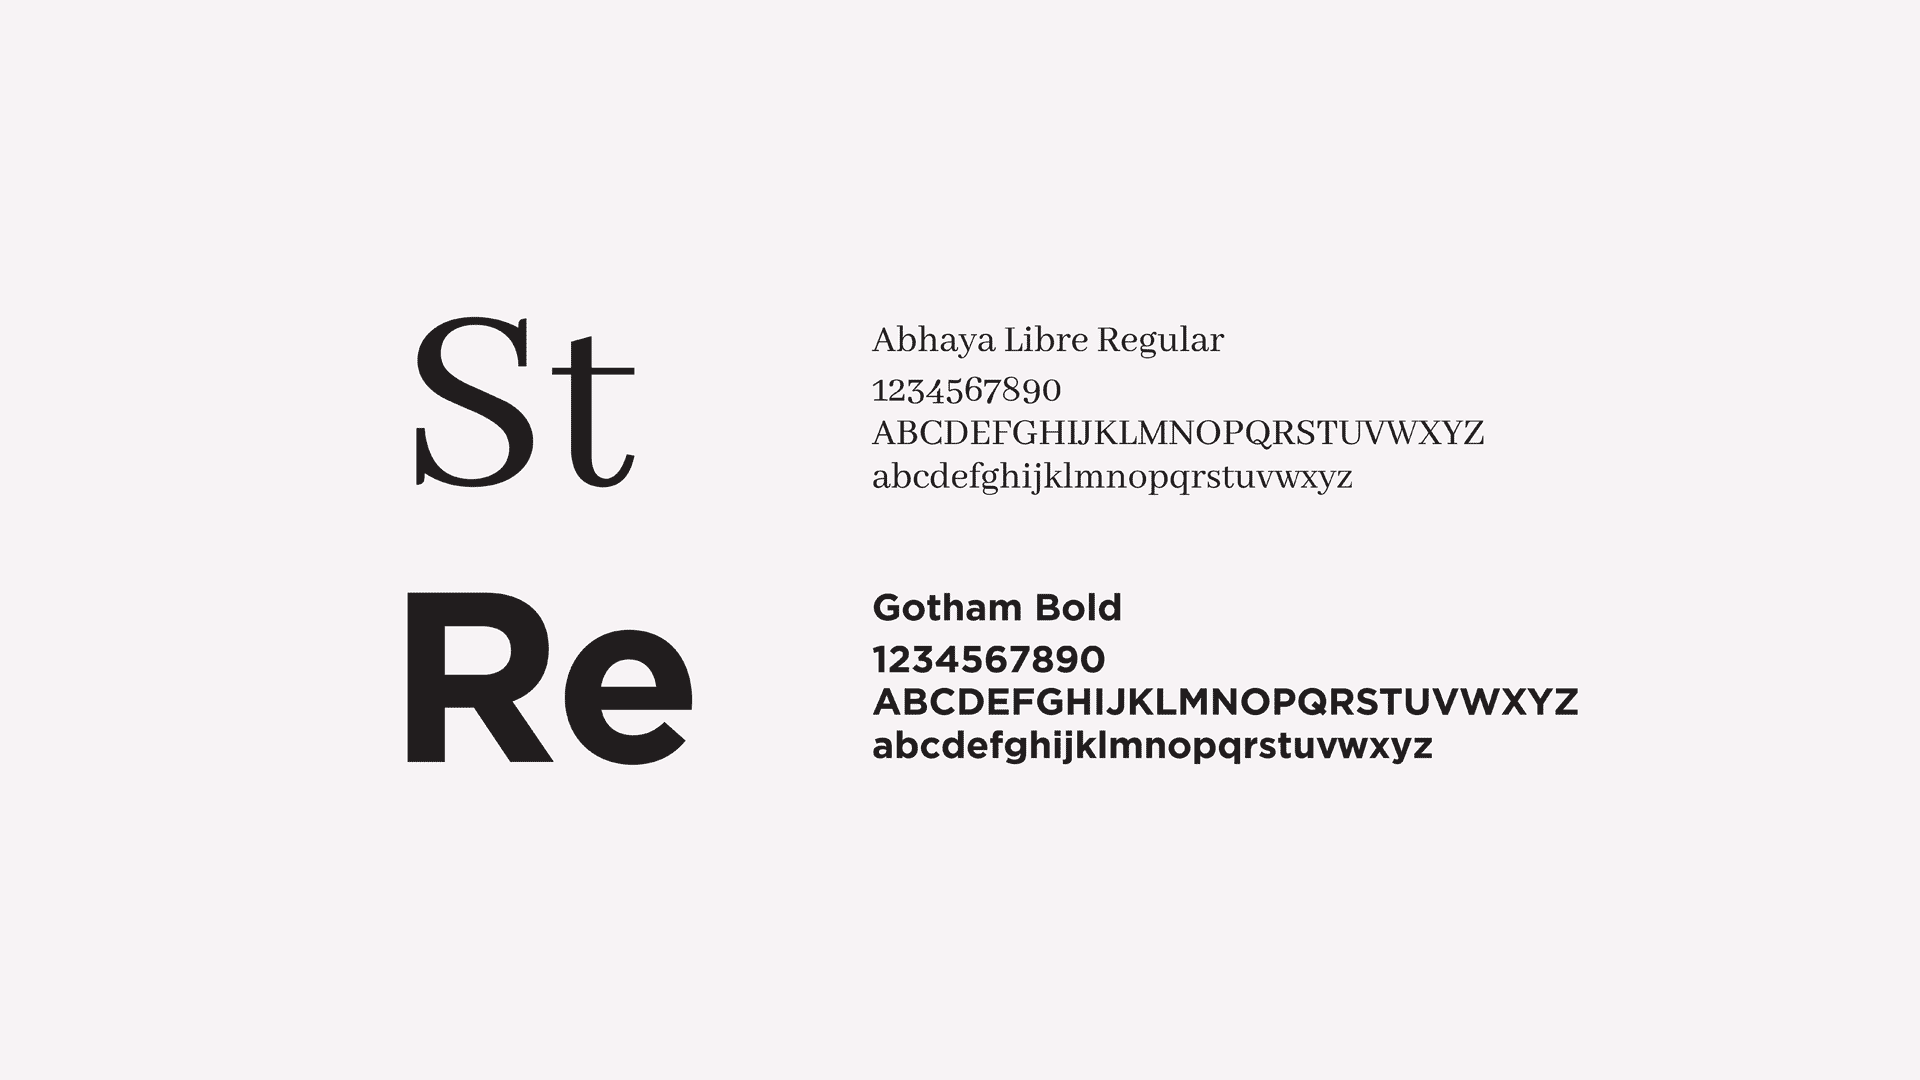 Stratus brand fonts